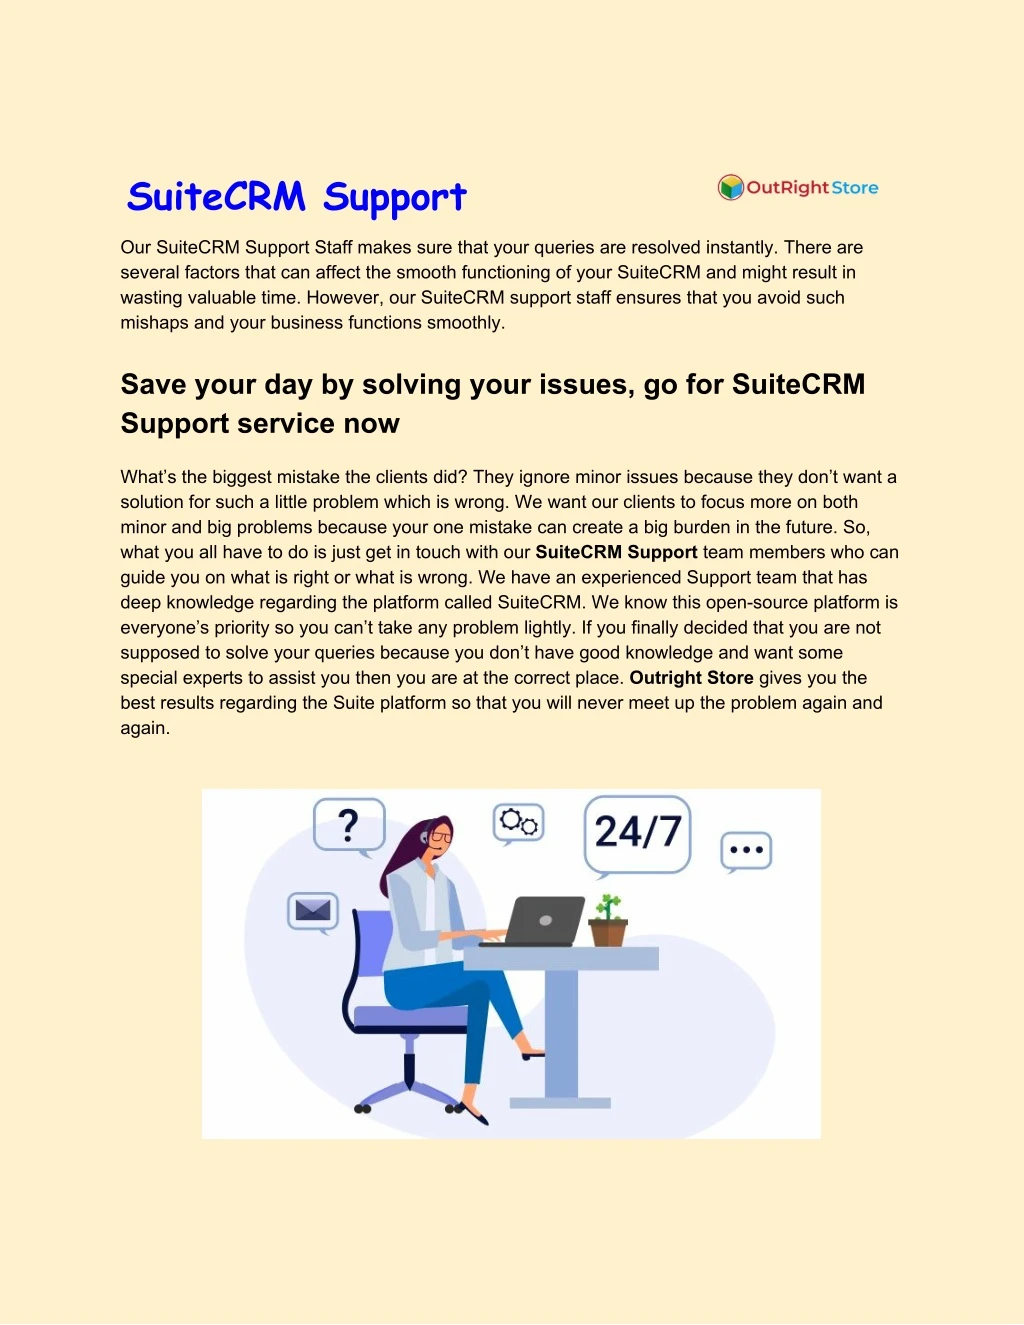 suitecrm support